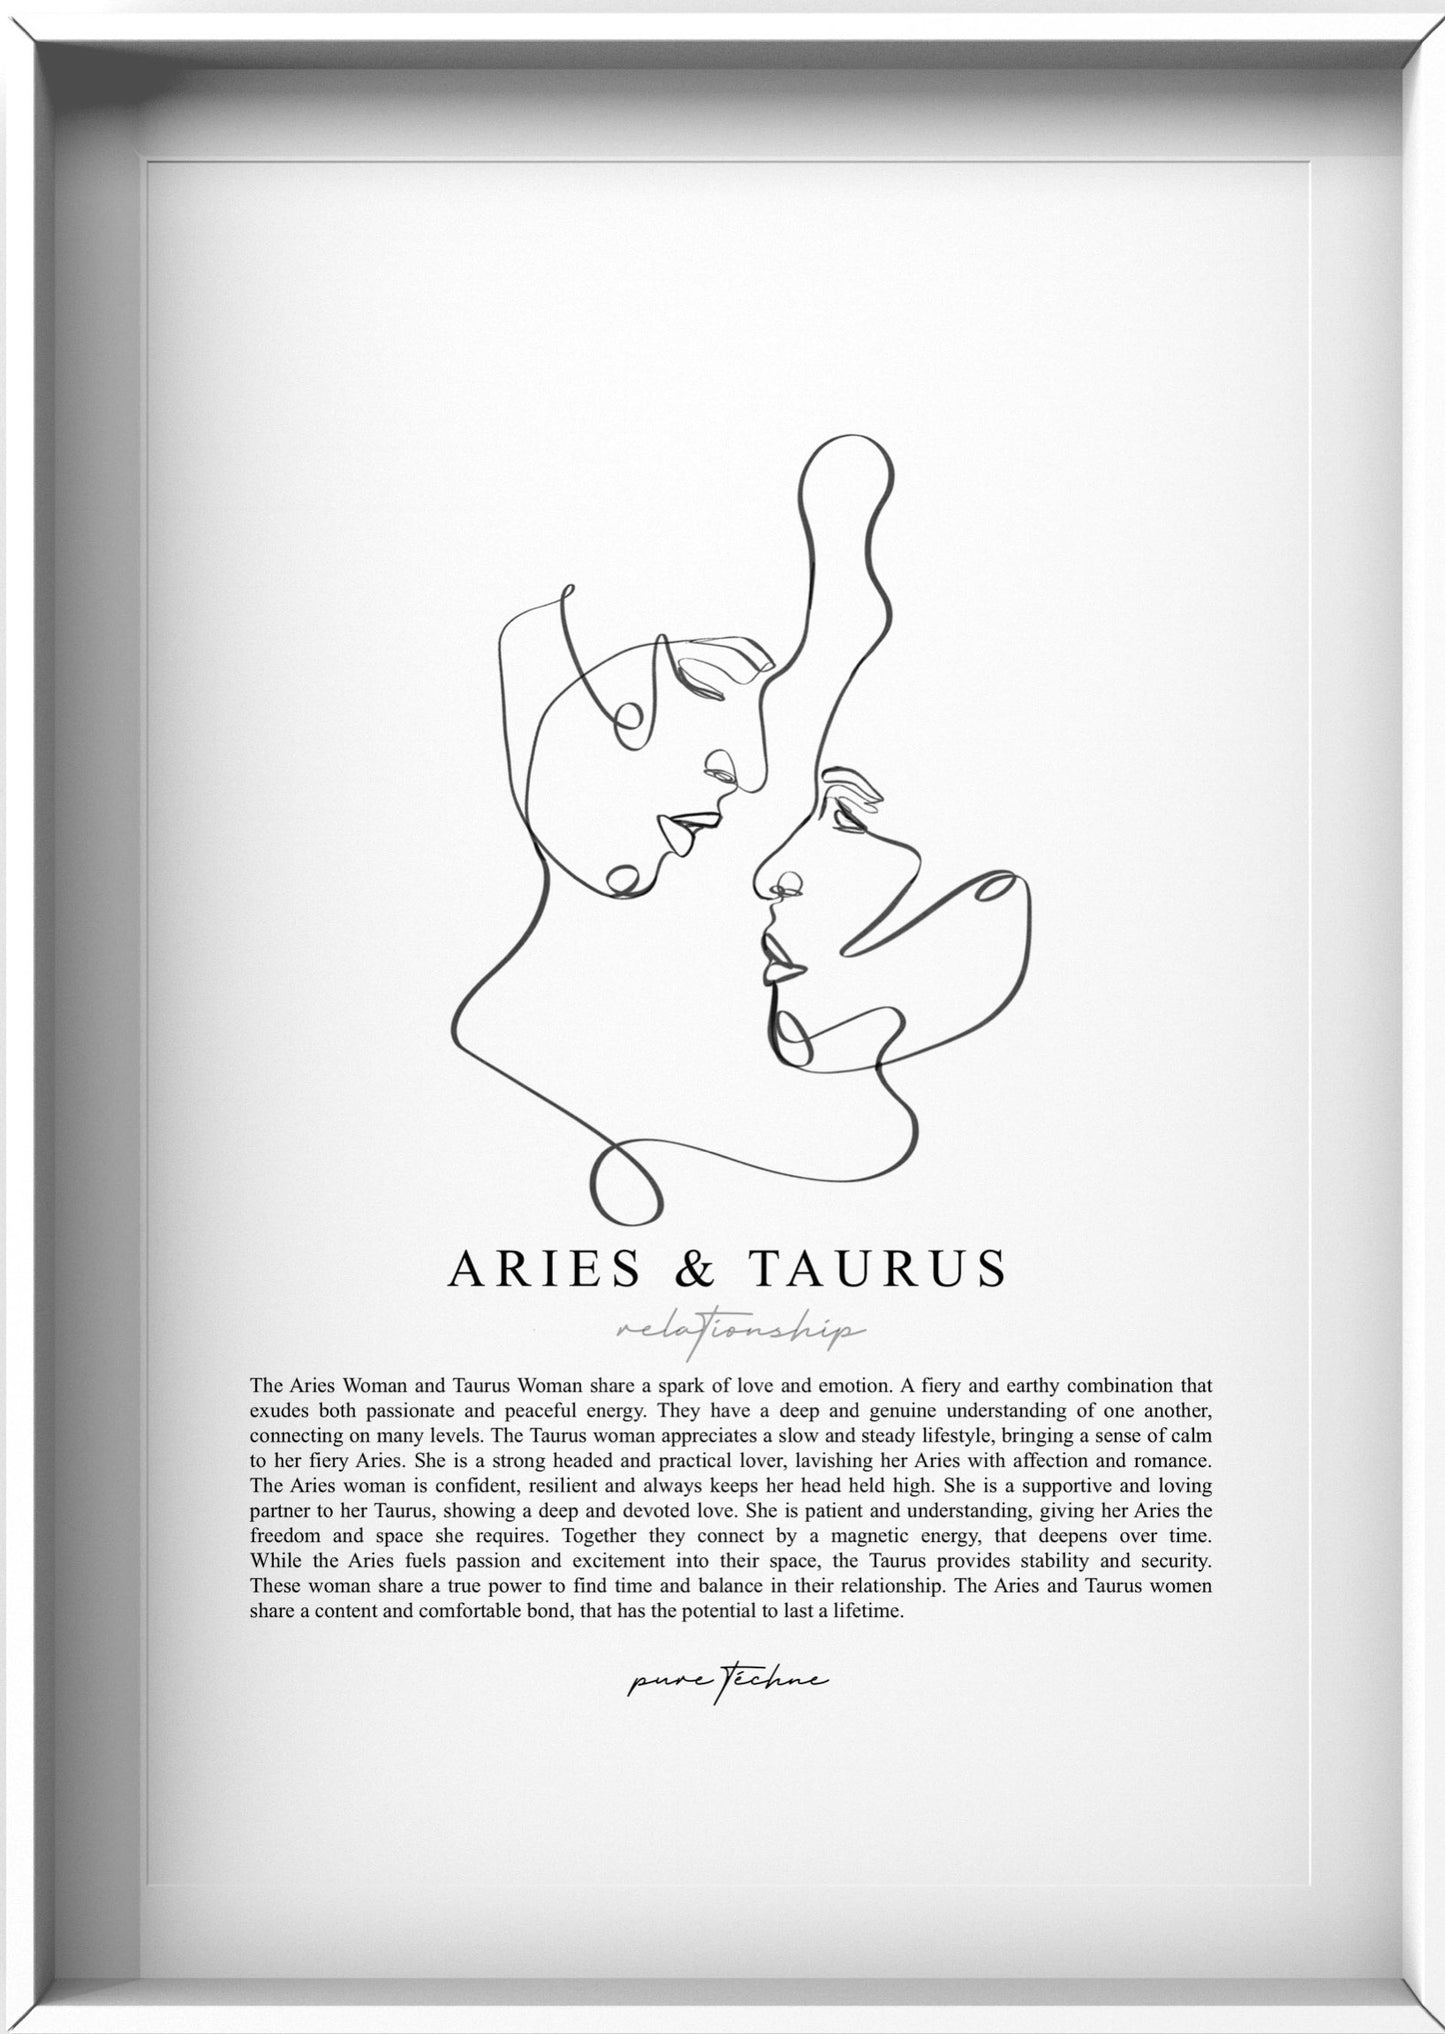 Aries Woman & Taurus Woman